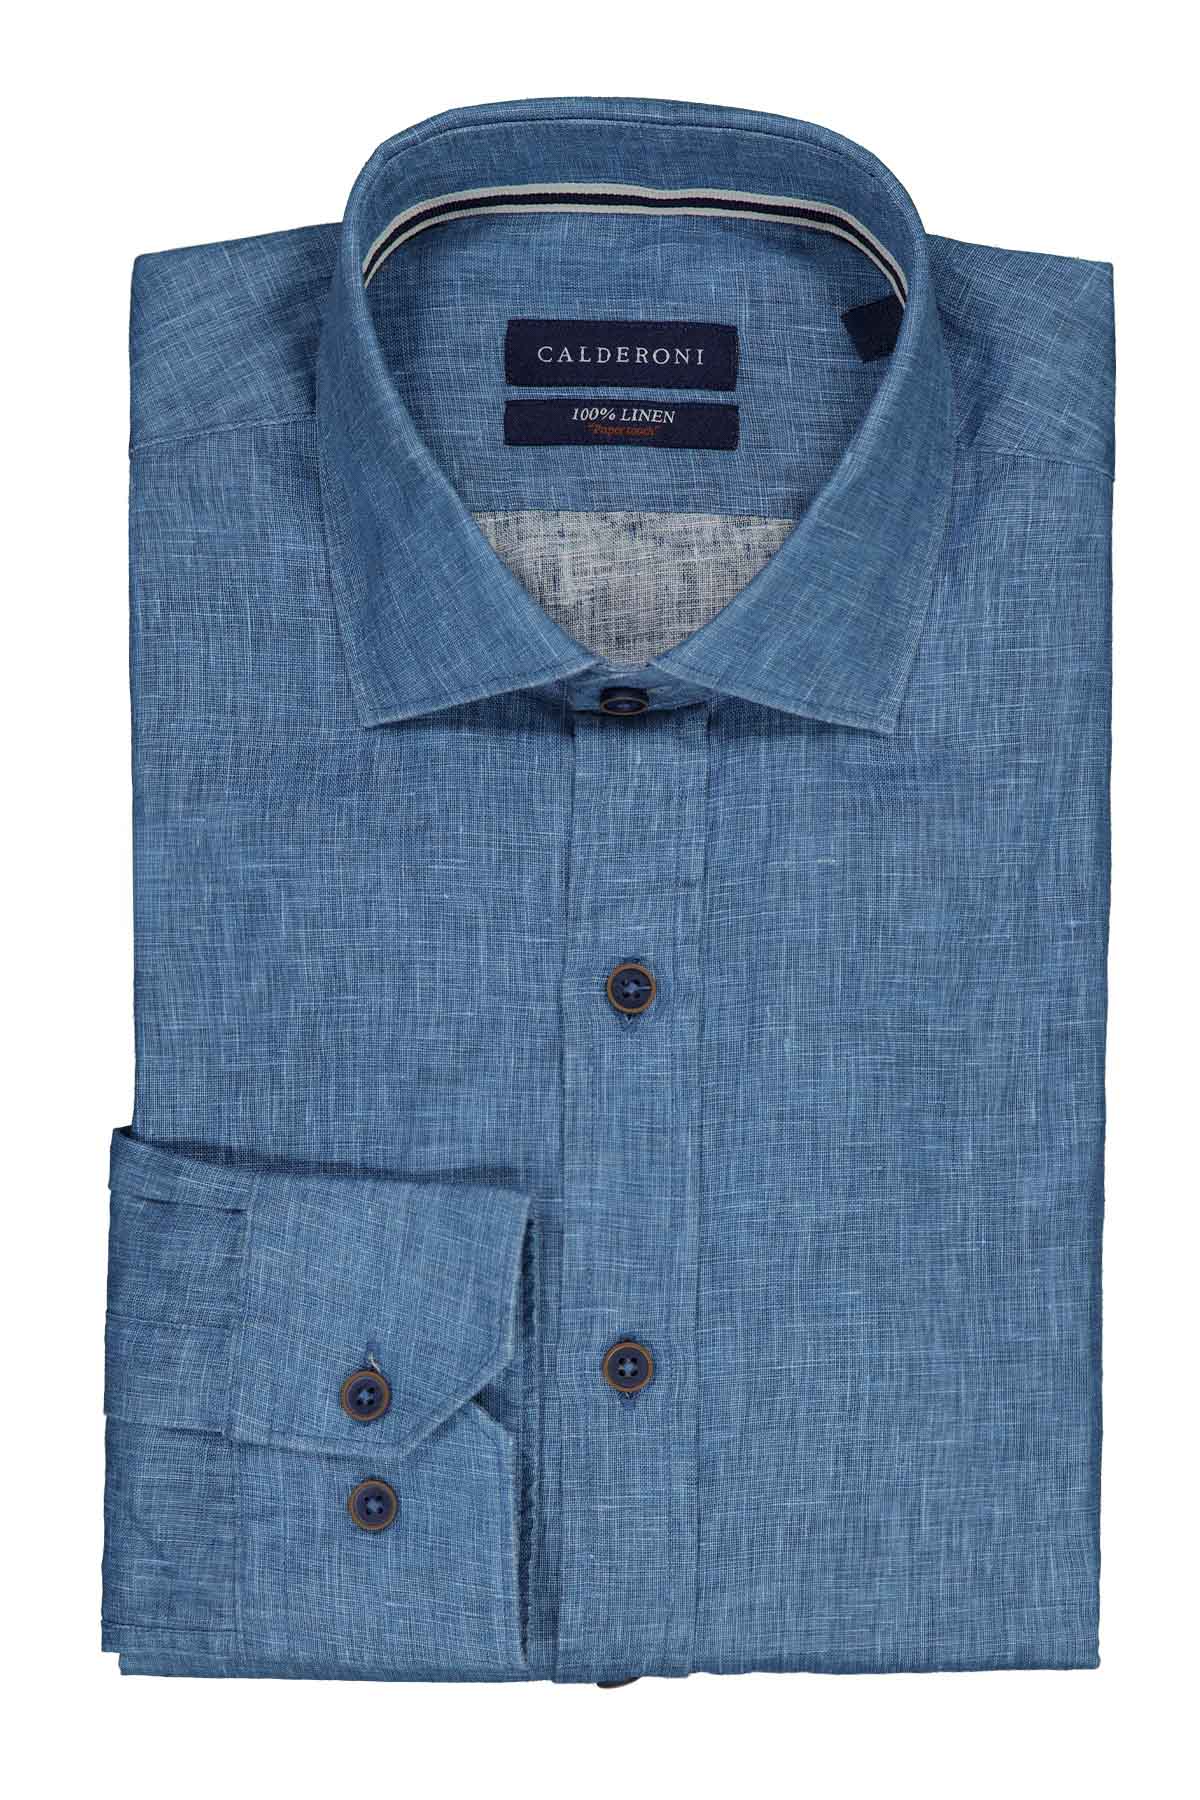 Camisa Casual LINEN Calderoni Azul Contemporary Fit